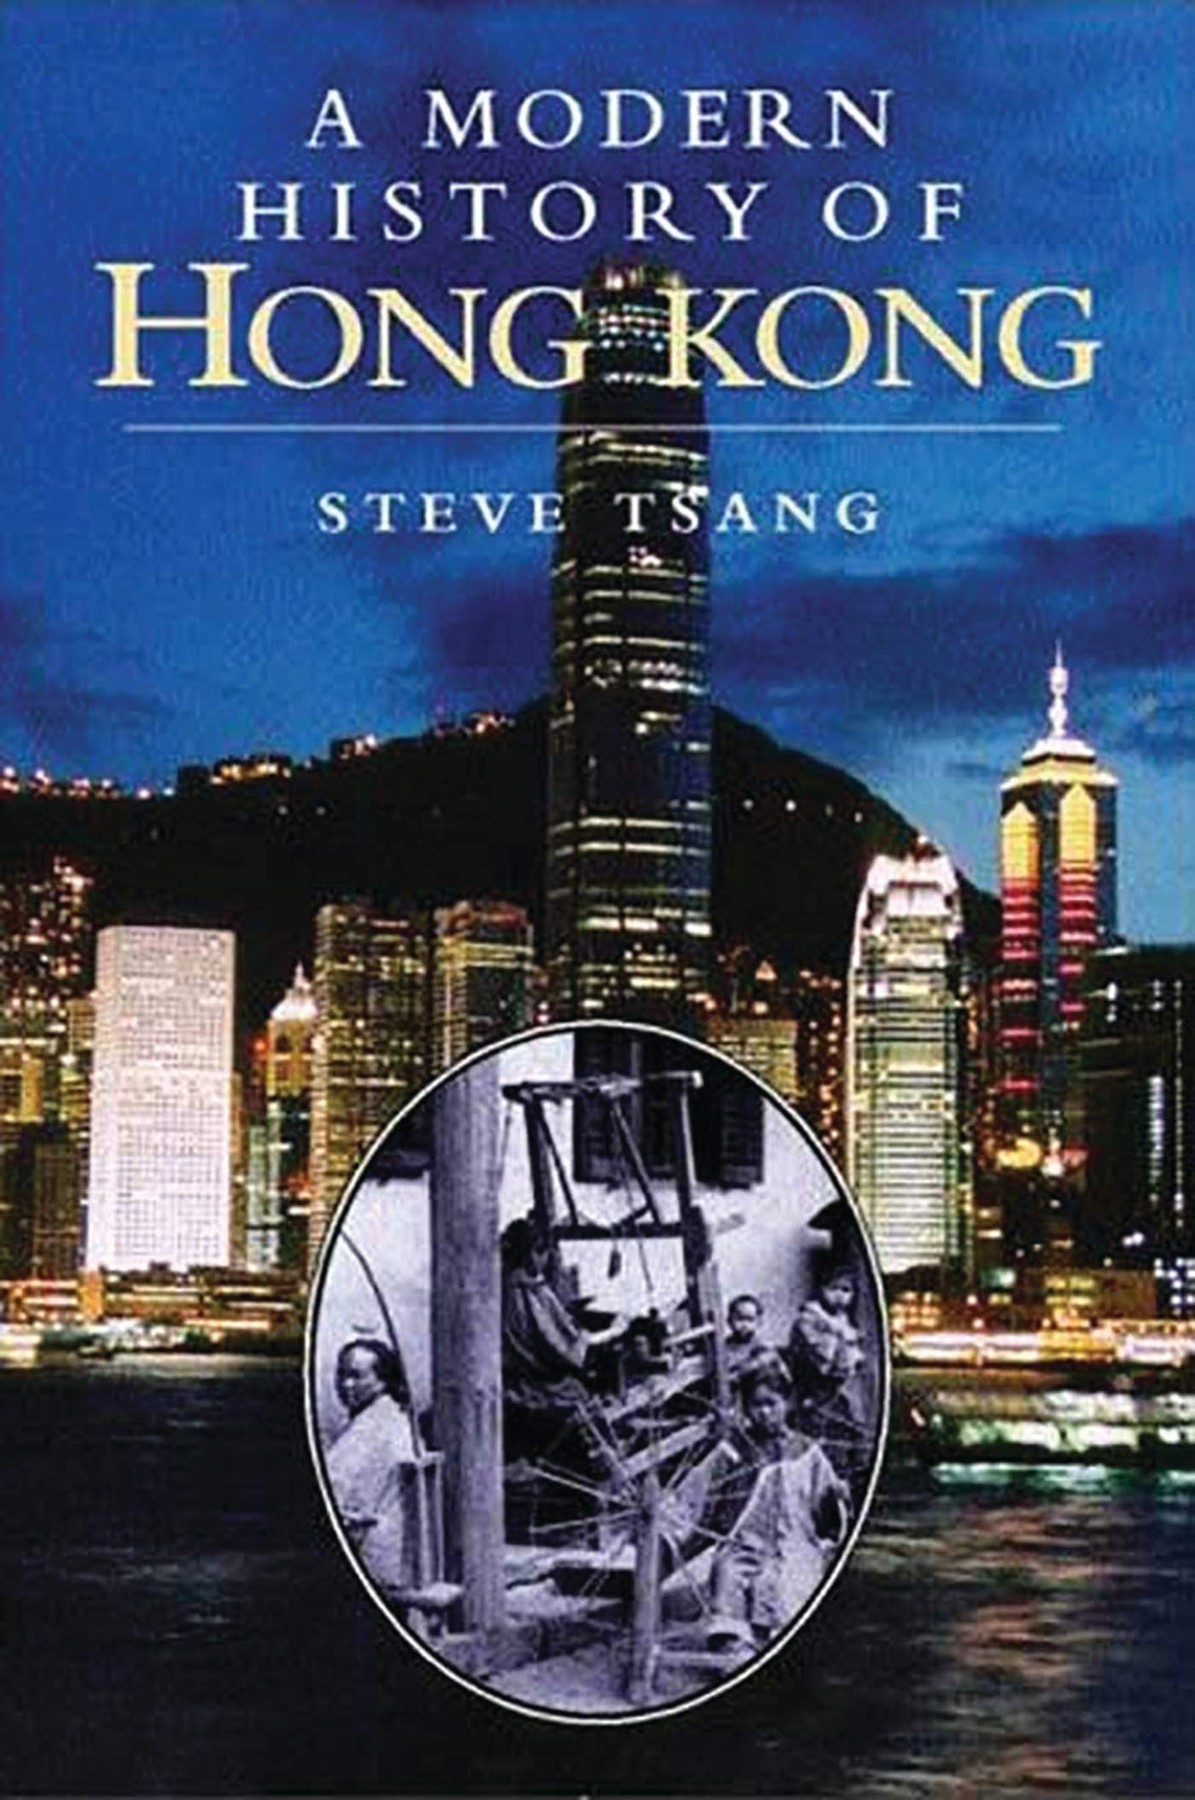 A Modern History of Hong Kong by Steve Tsang